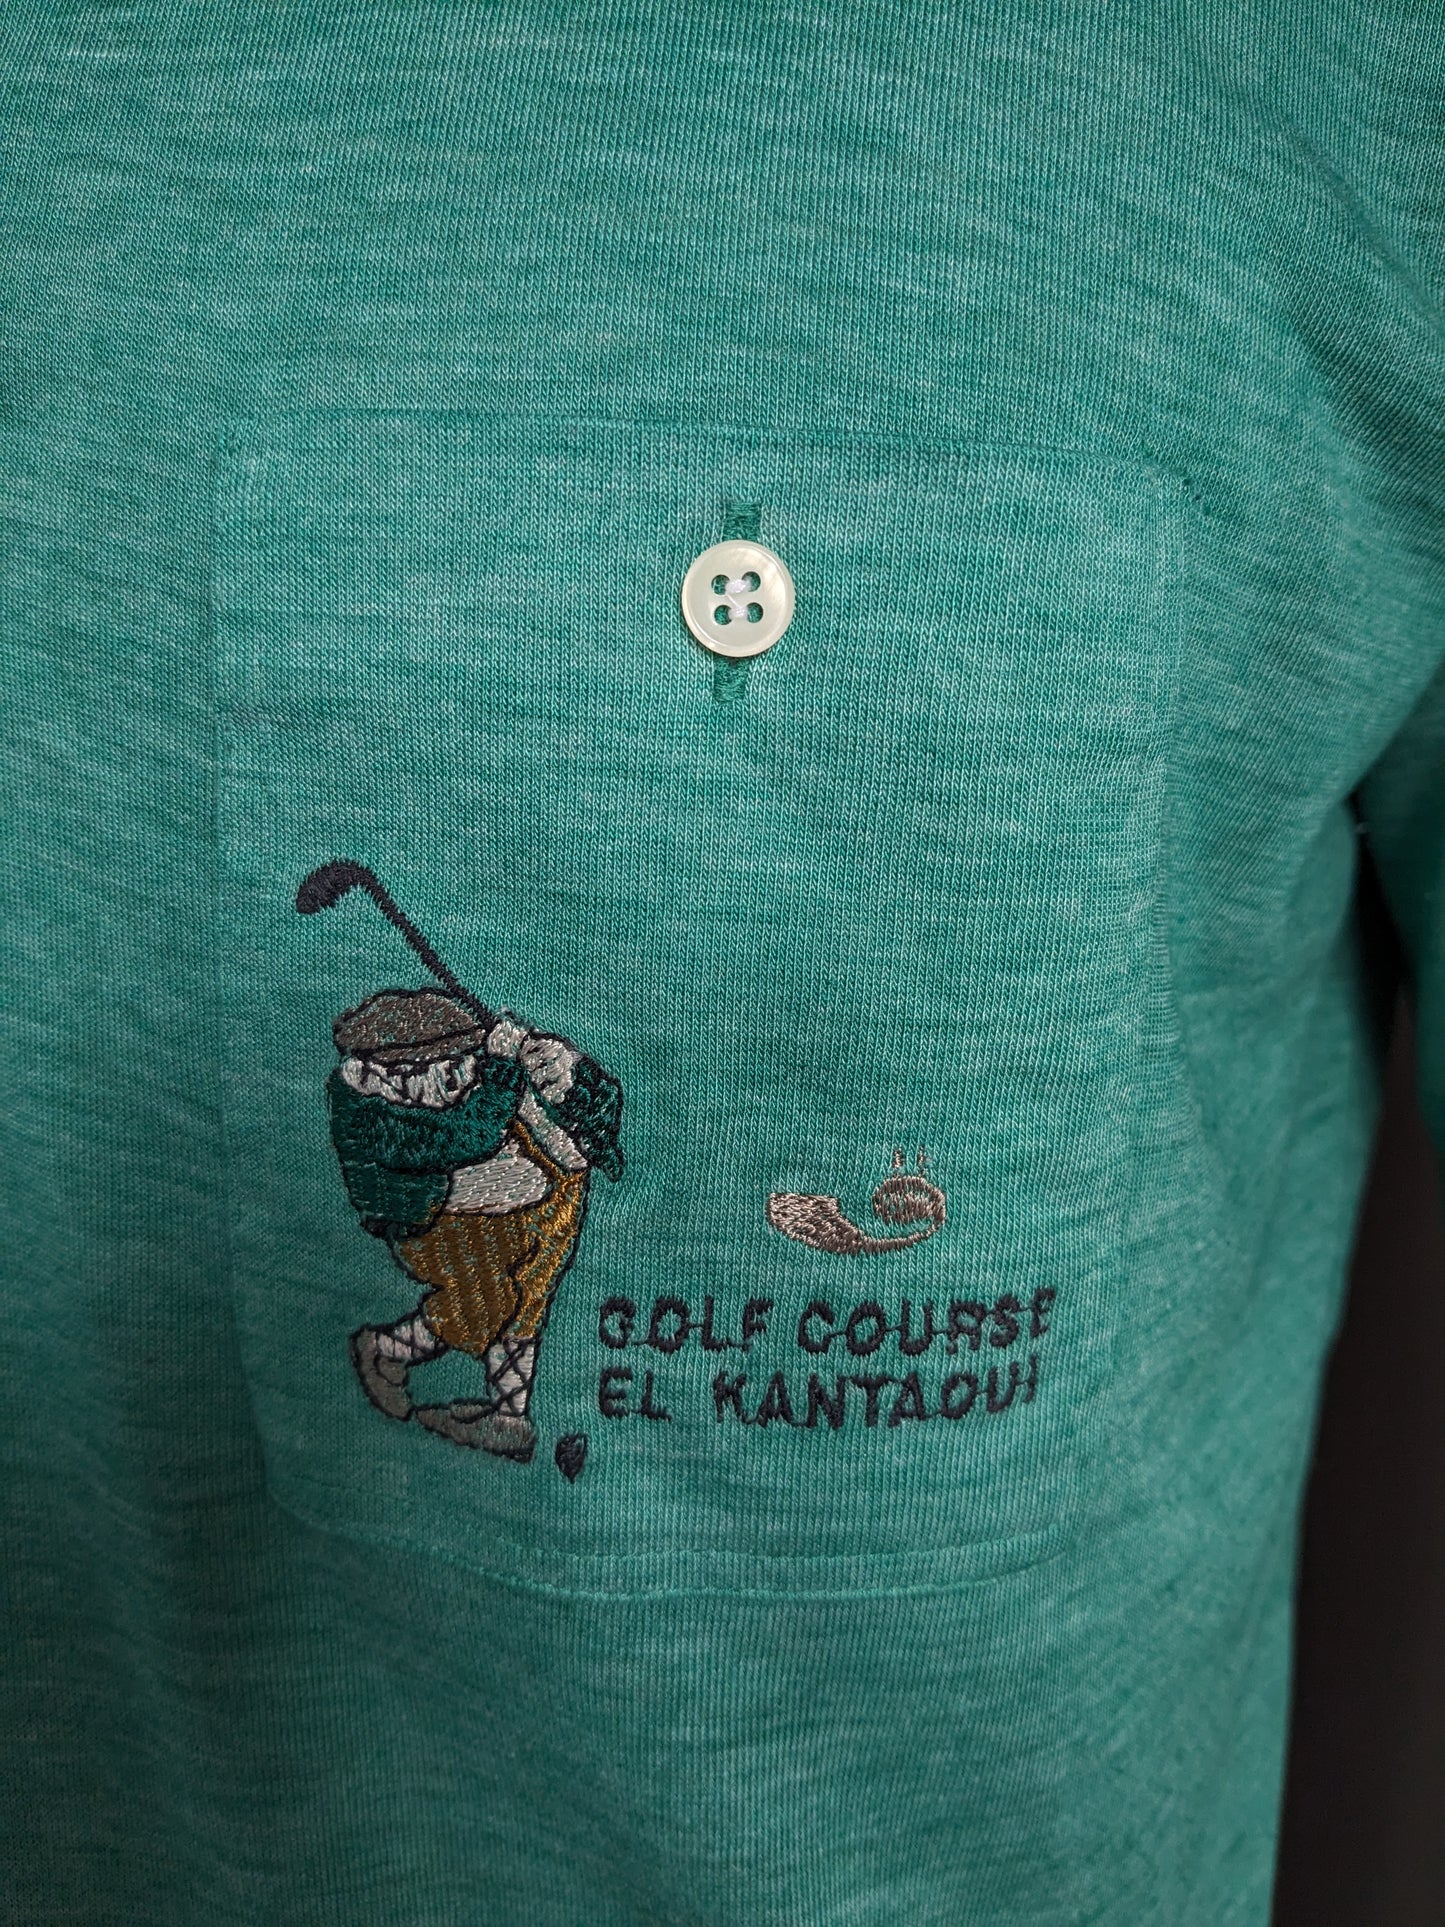 Vintage Gerard Bert Golf polo. "Golf Course el Kantaoui". Groen gemêleerd. Maat L.